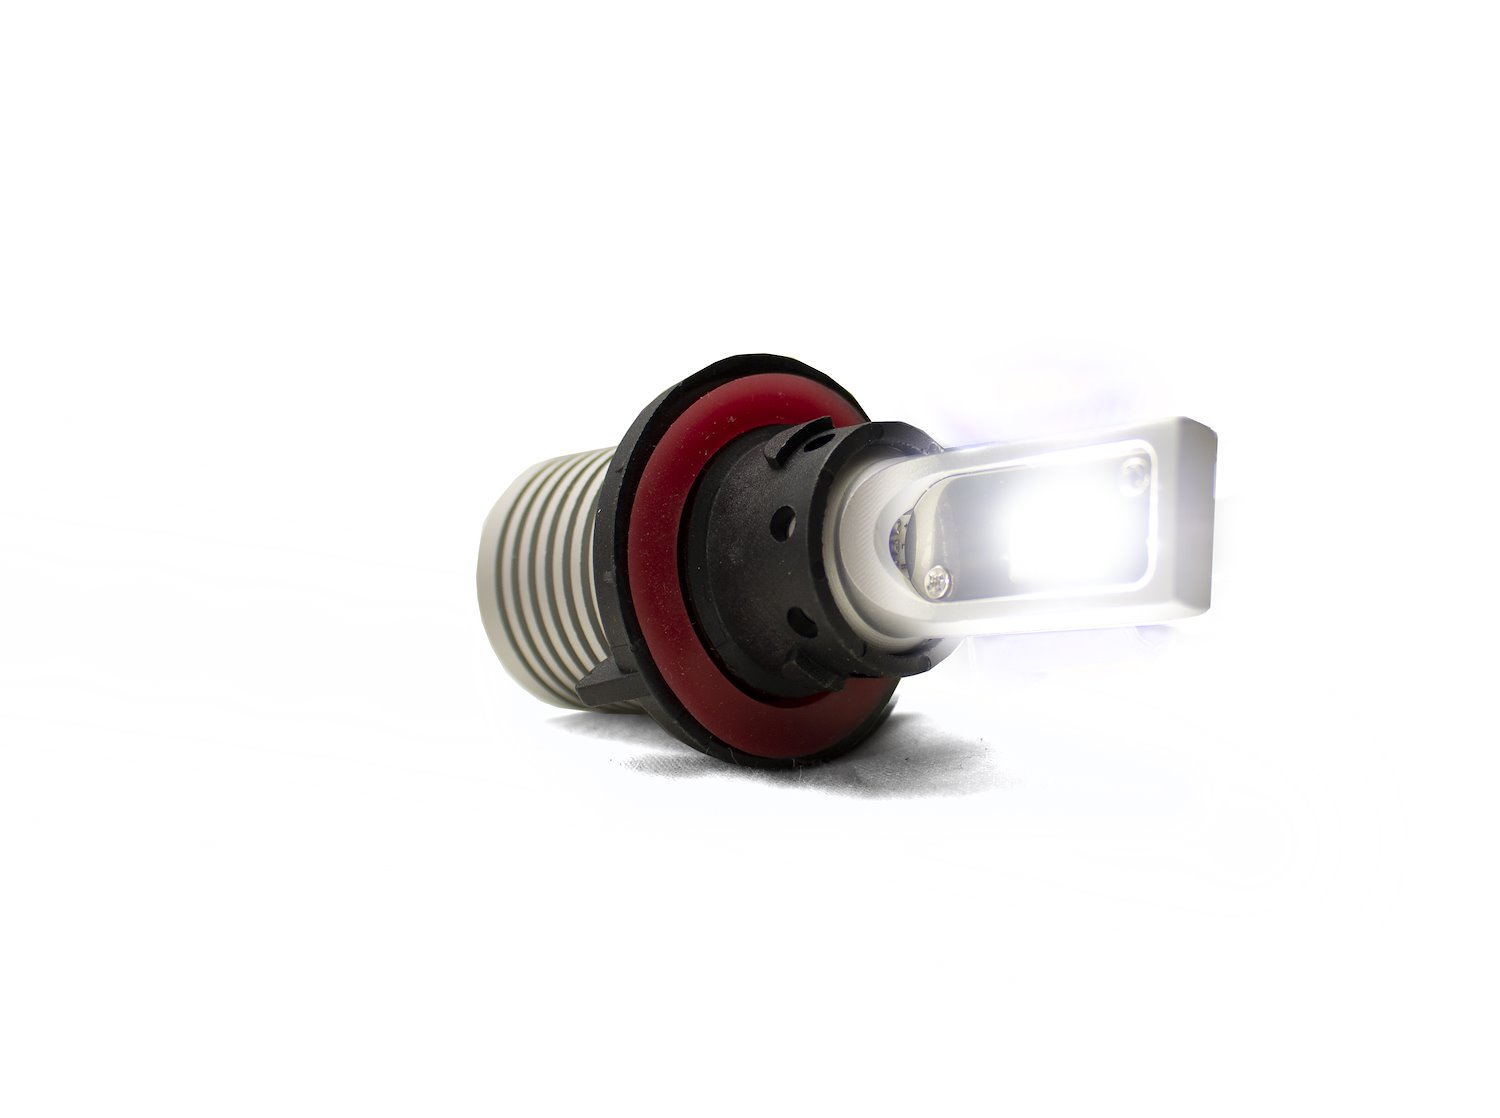 RSPNPH13 H13 PNP-Series Plug-N-Play Super LUX LED OEM Replacement Bulb Kit